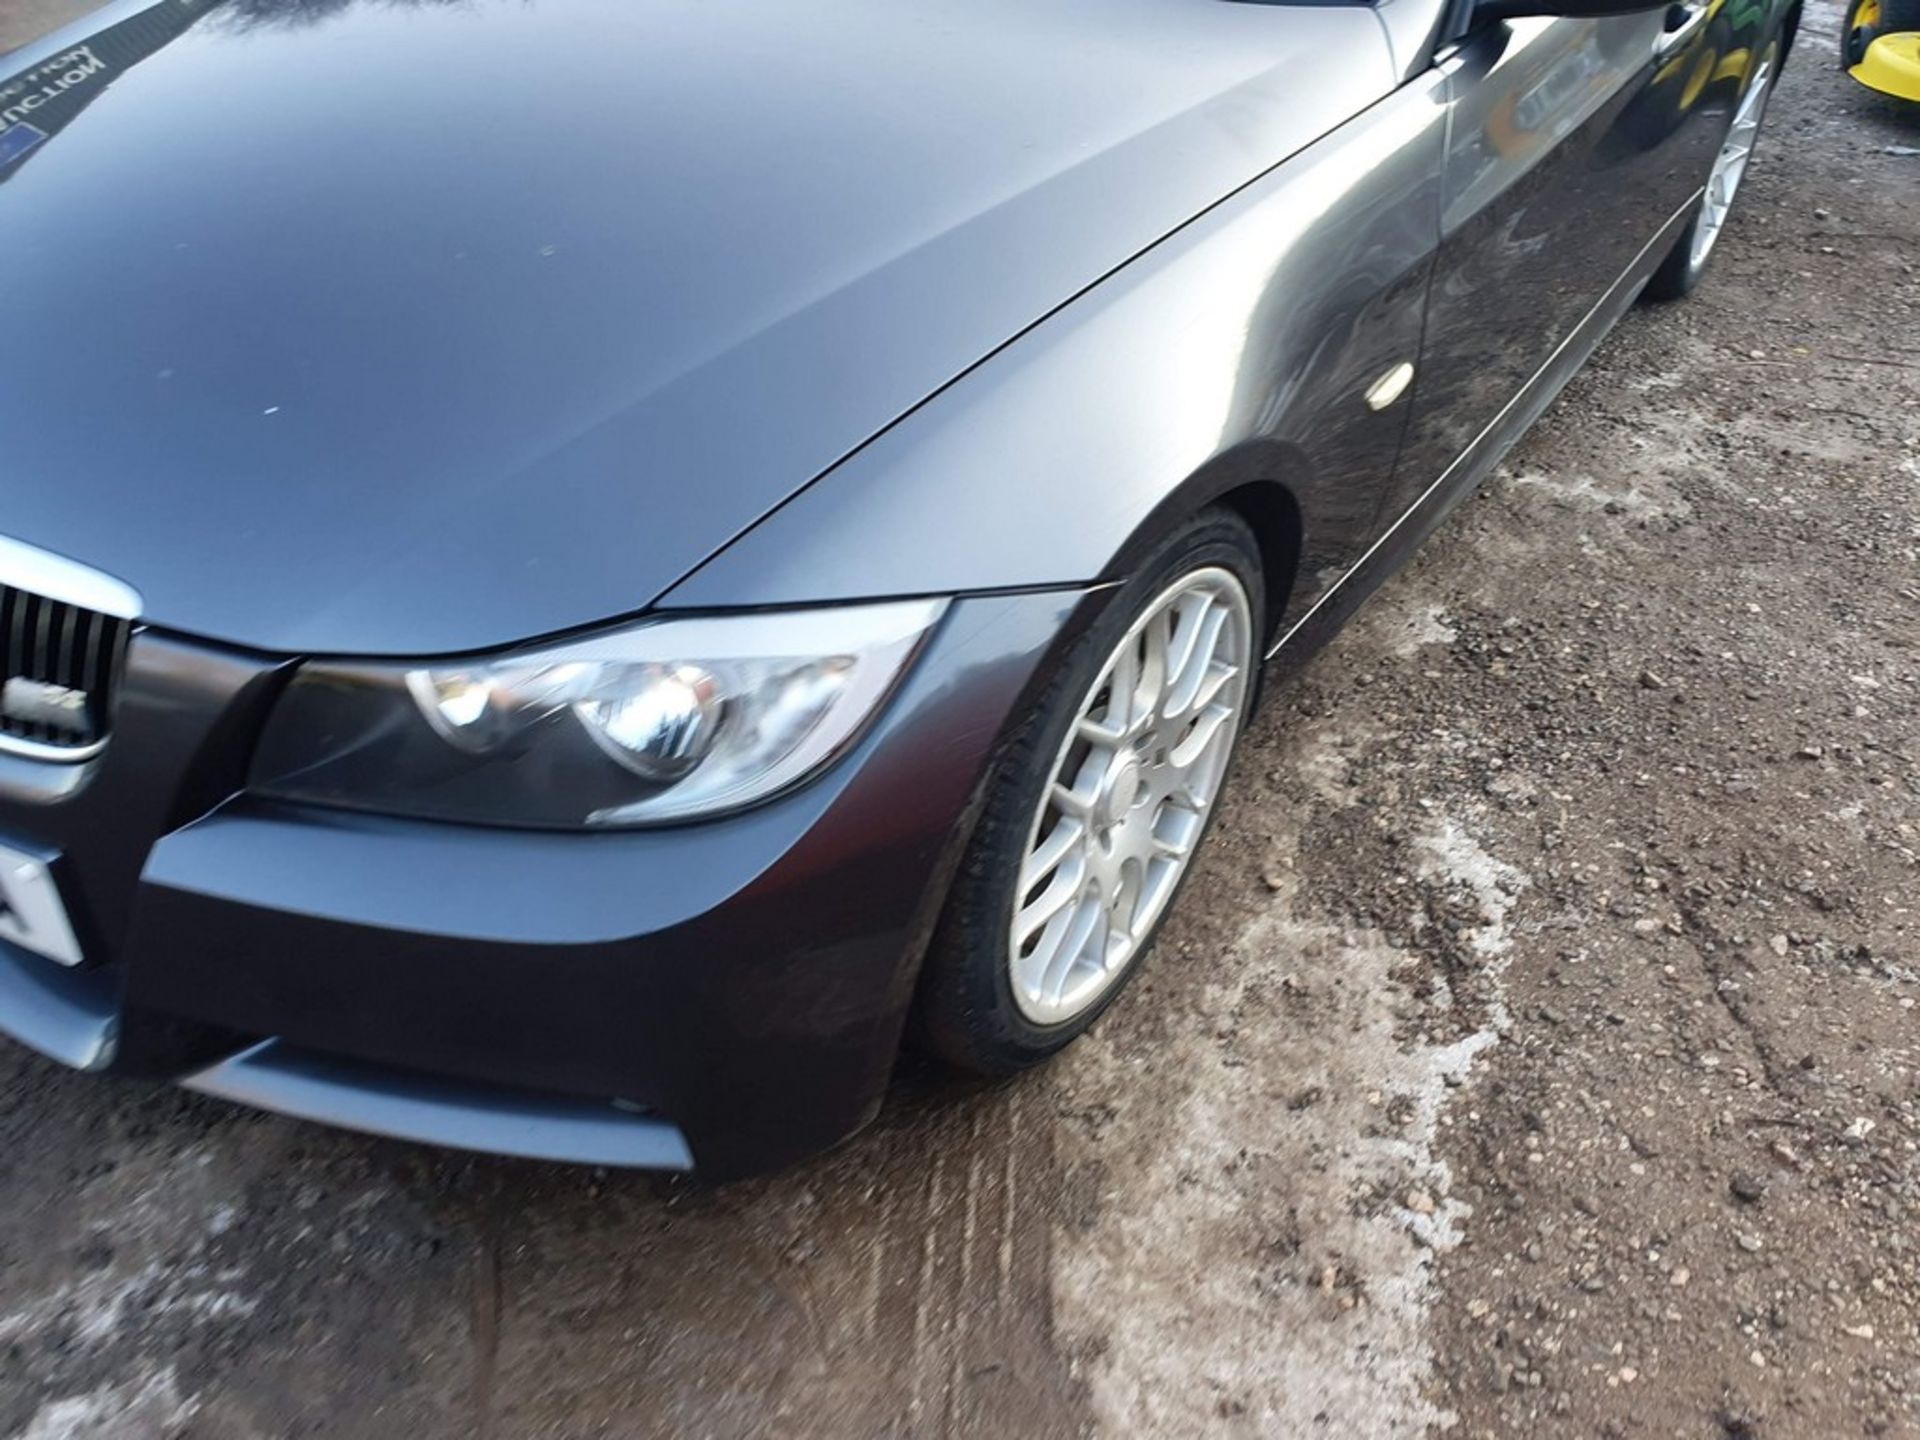 06/56 BMW 325I M SPORT TOURING AUTO - 2497cc 5dr Estate (Grey, 178k) - Image 12 of 44